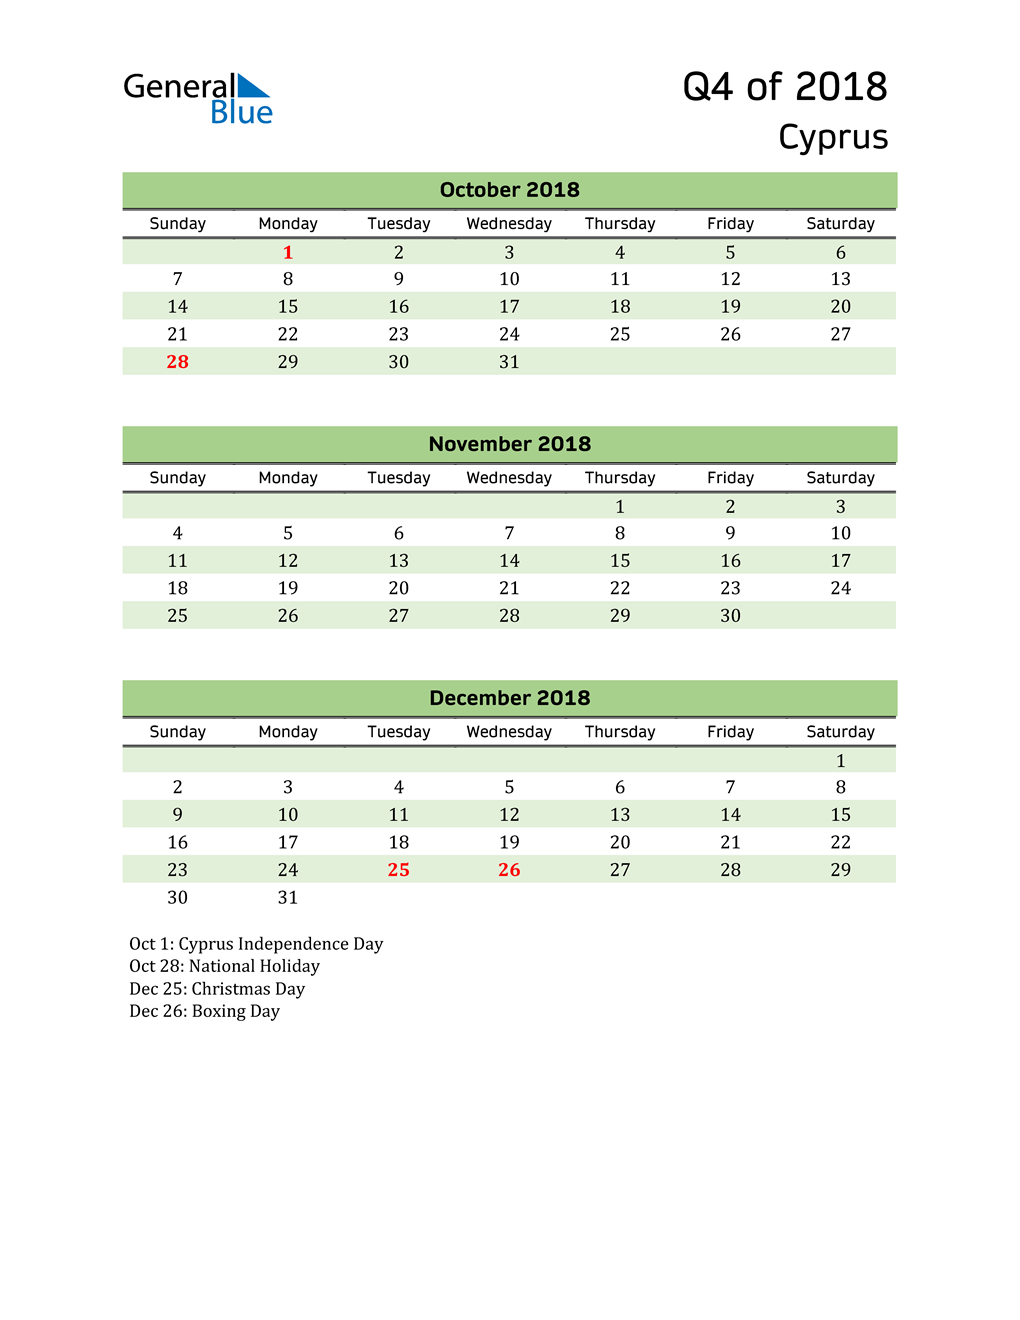  Quarterly Calendar 2018 with Cyprus Holidays 